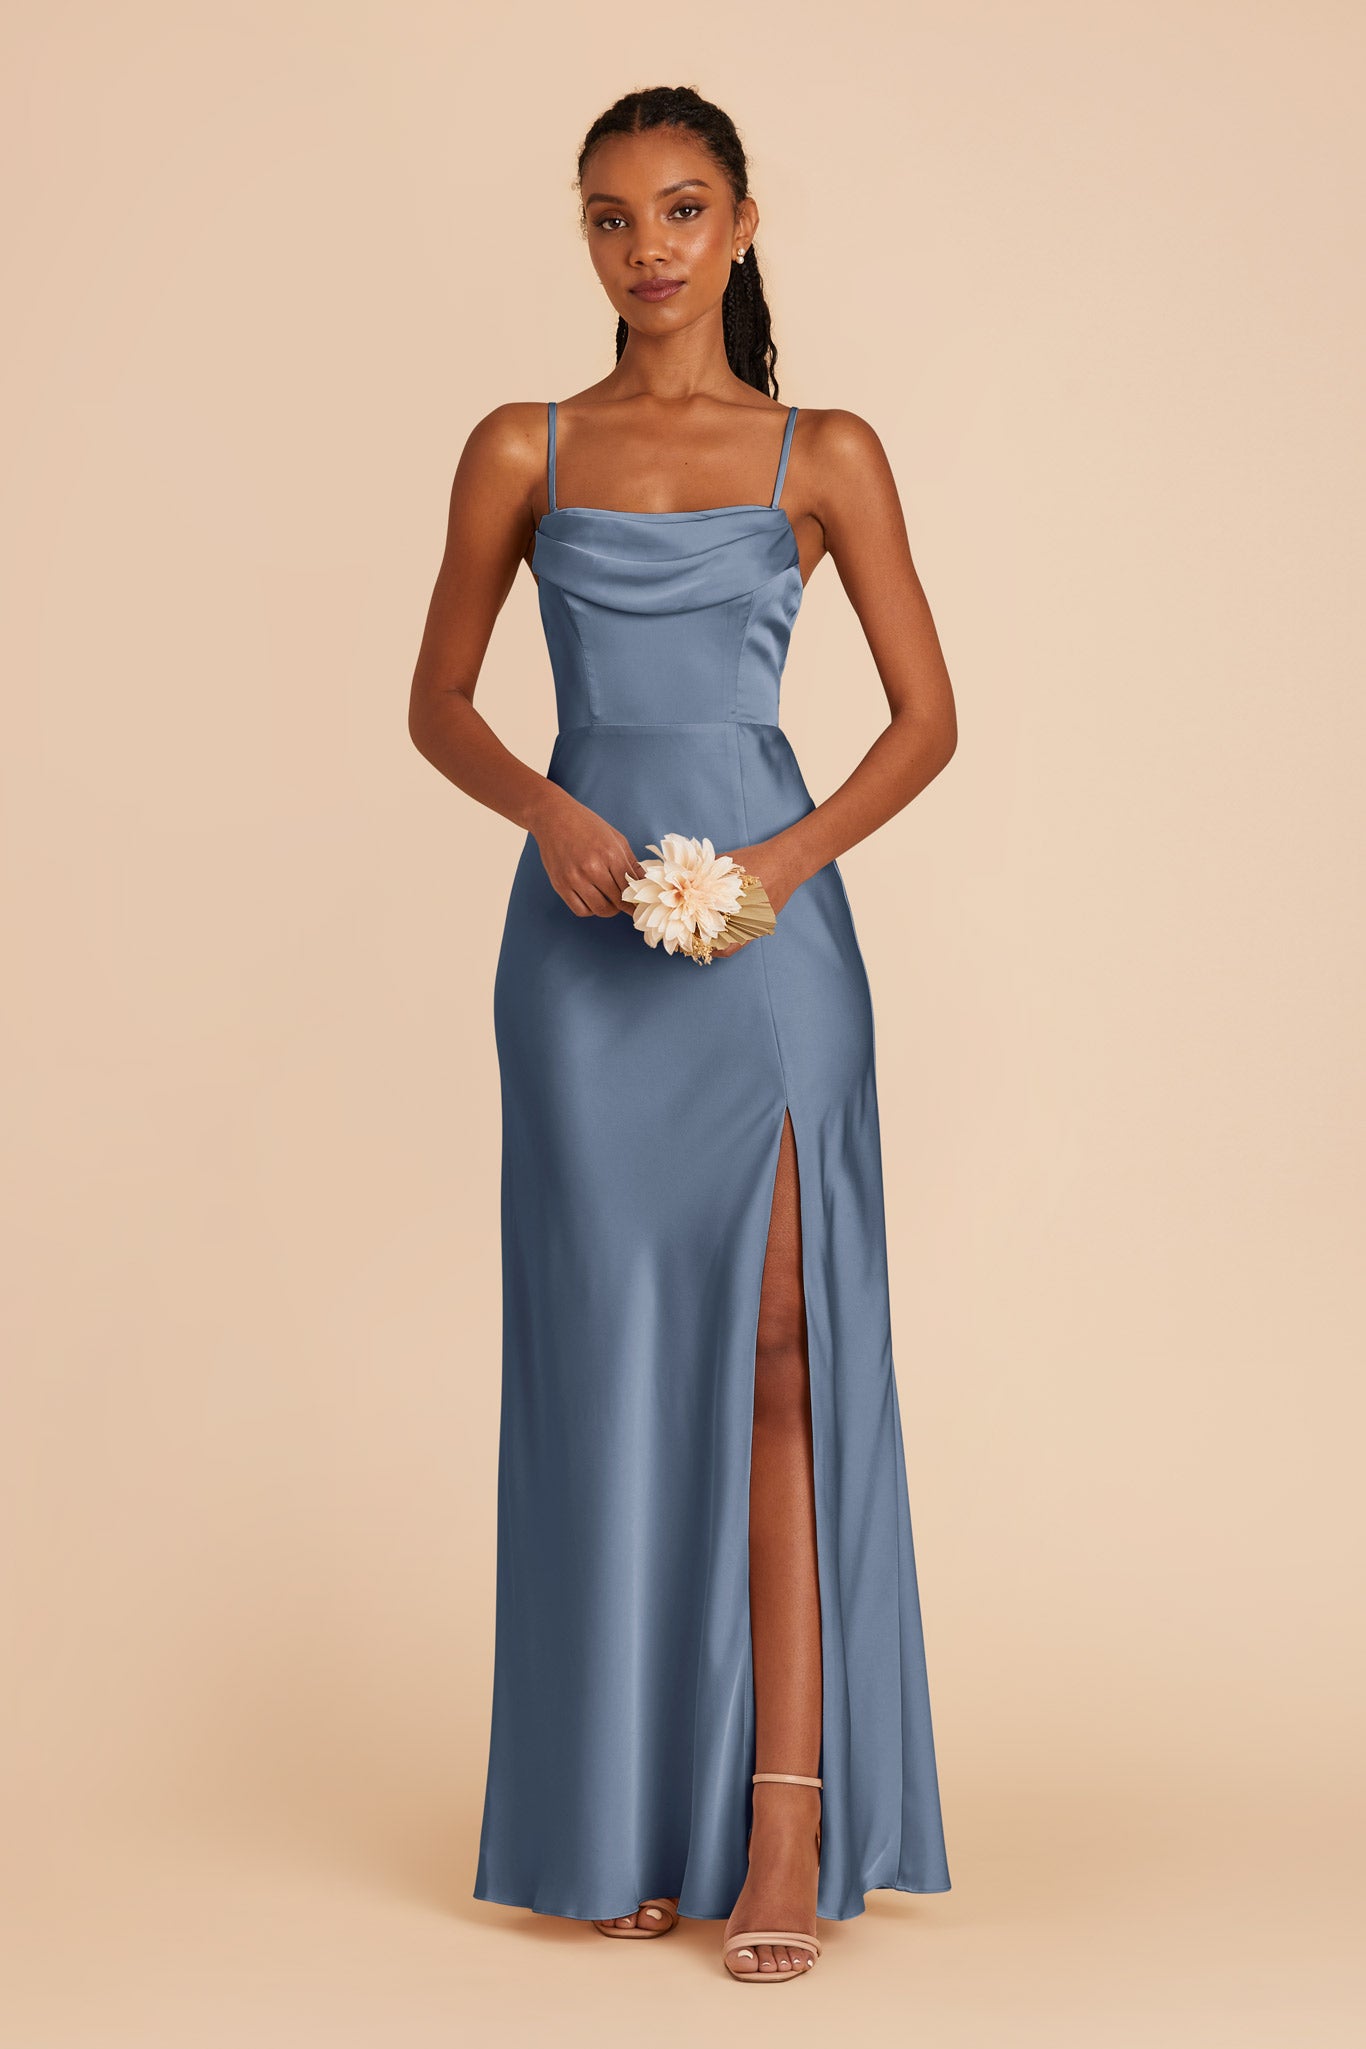 French Blue Mia Matte Satin Convertible Dress by Birdy Grey